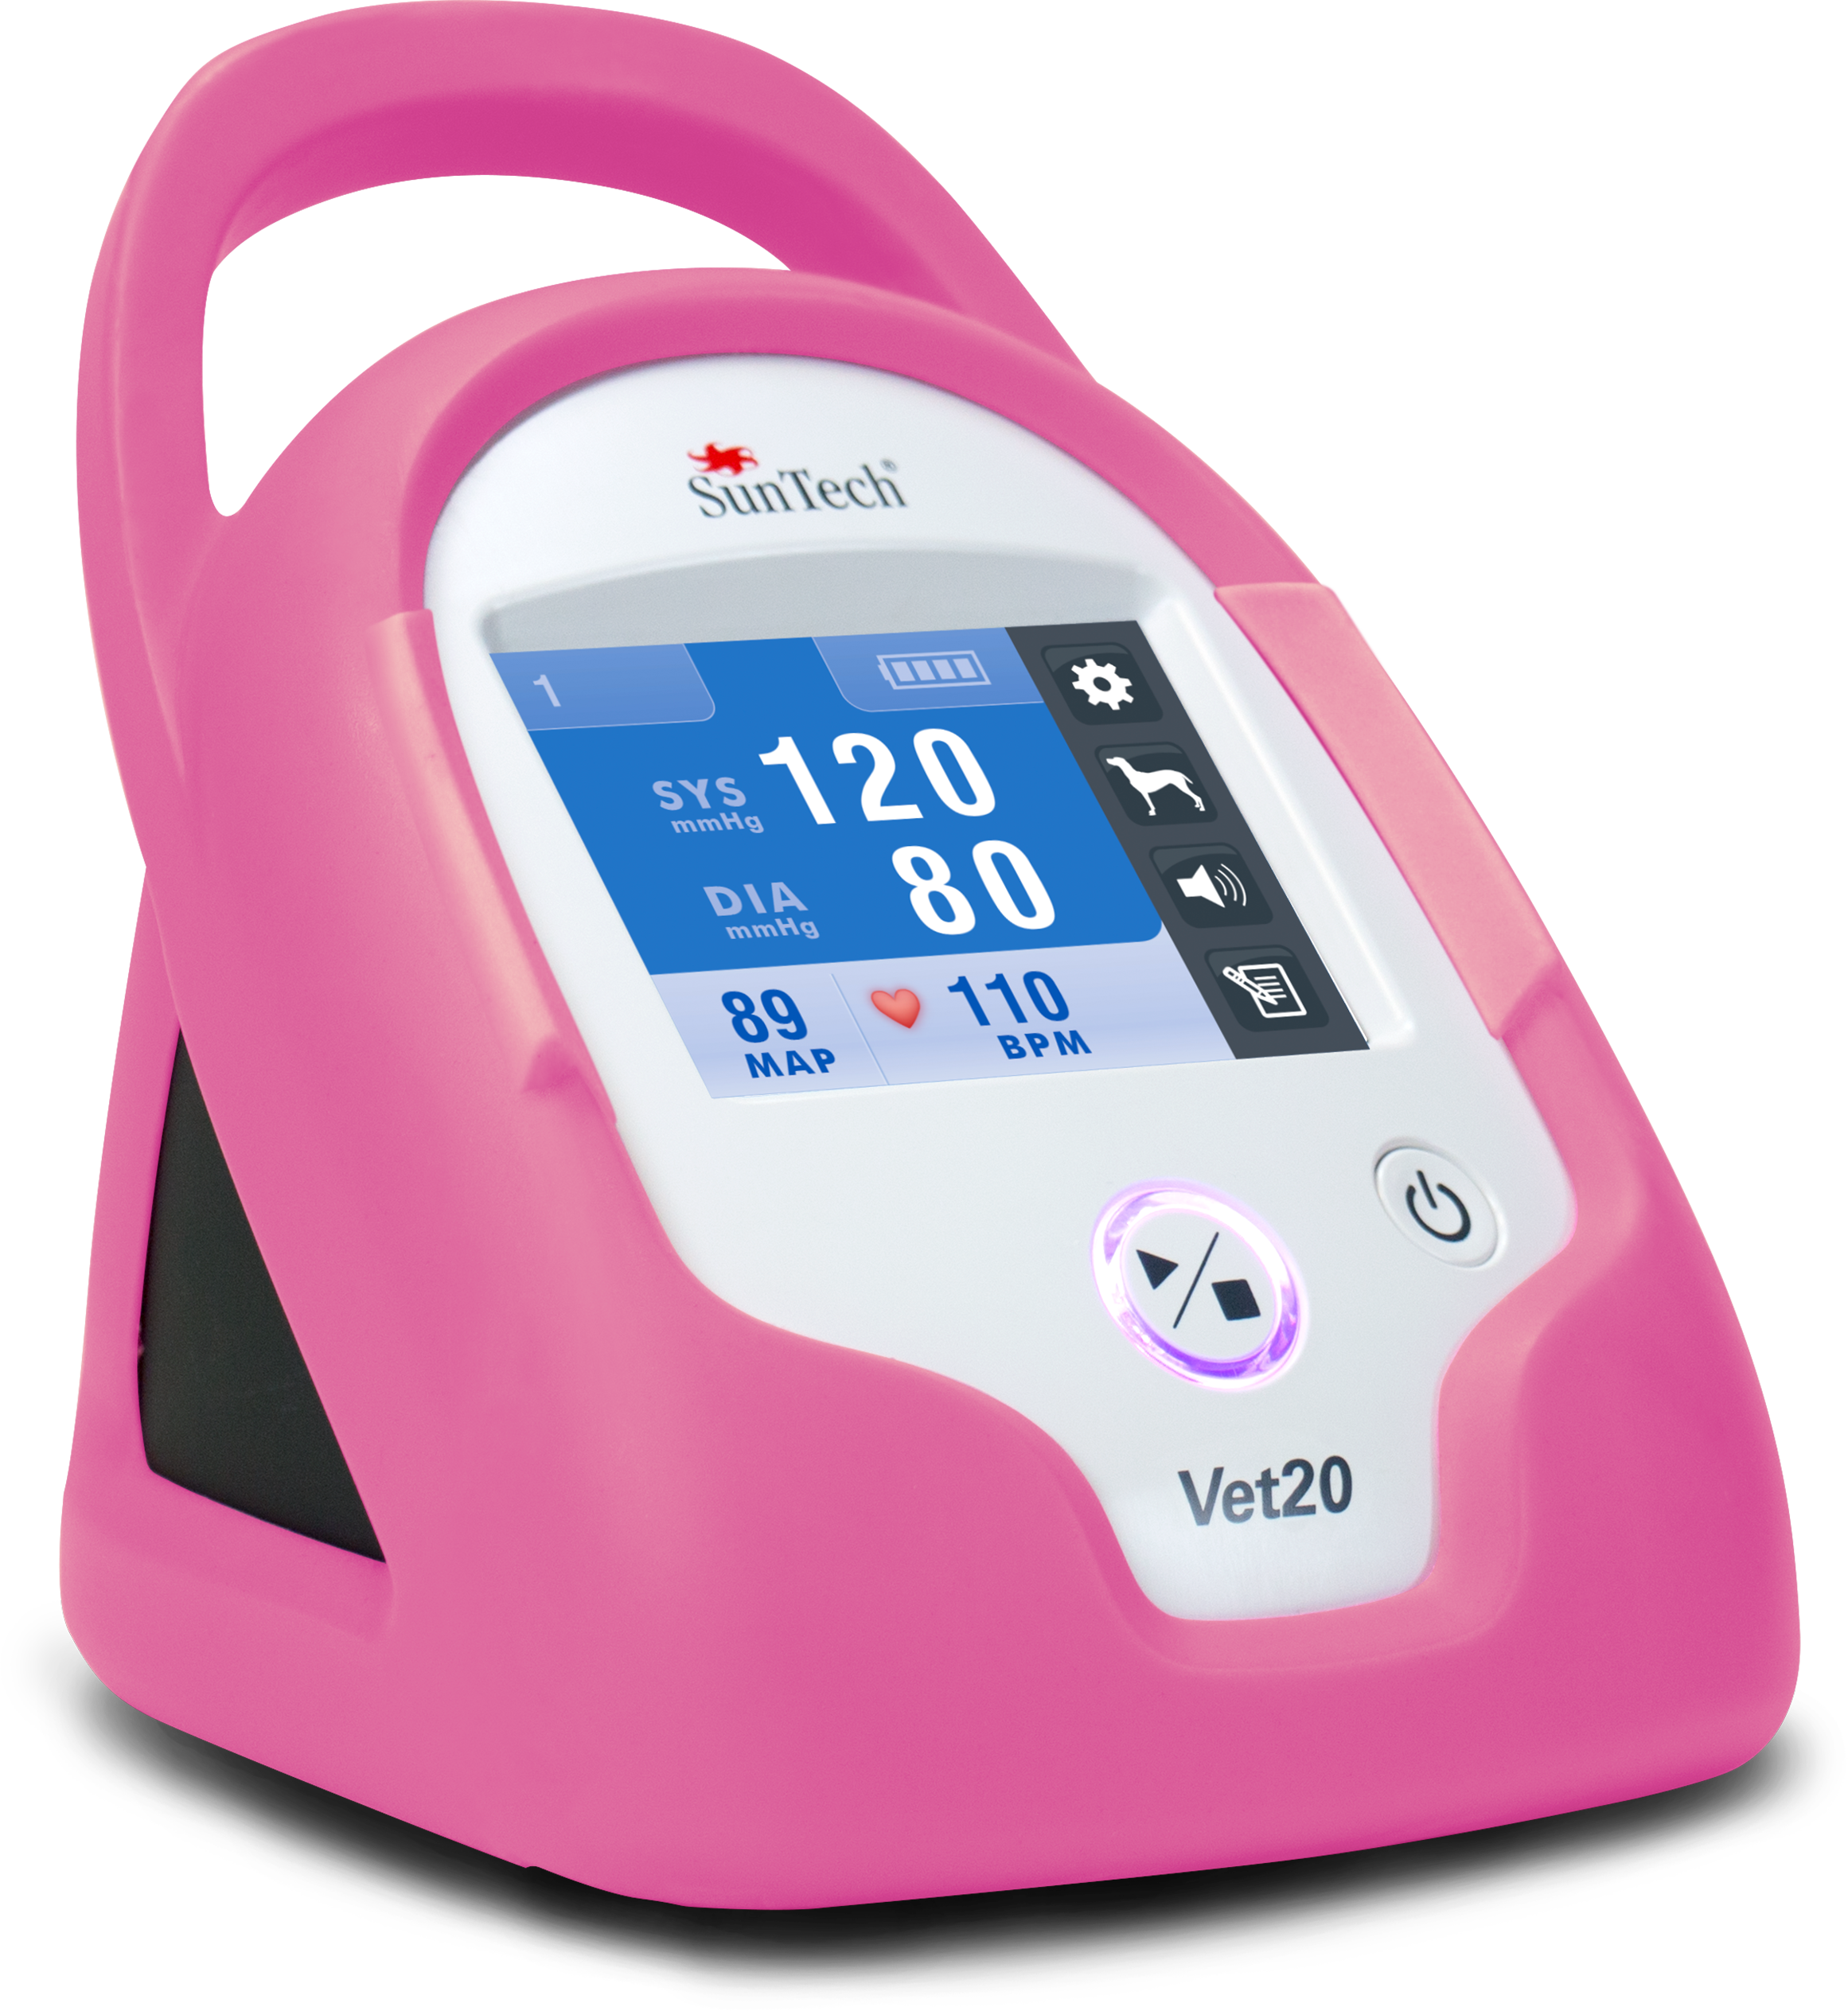 SunTech V20 Pet Blood Pressure Monitor